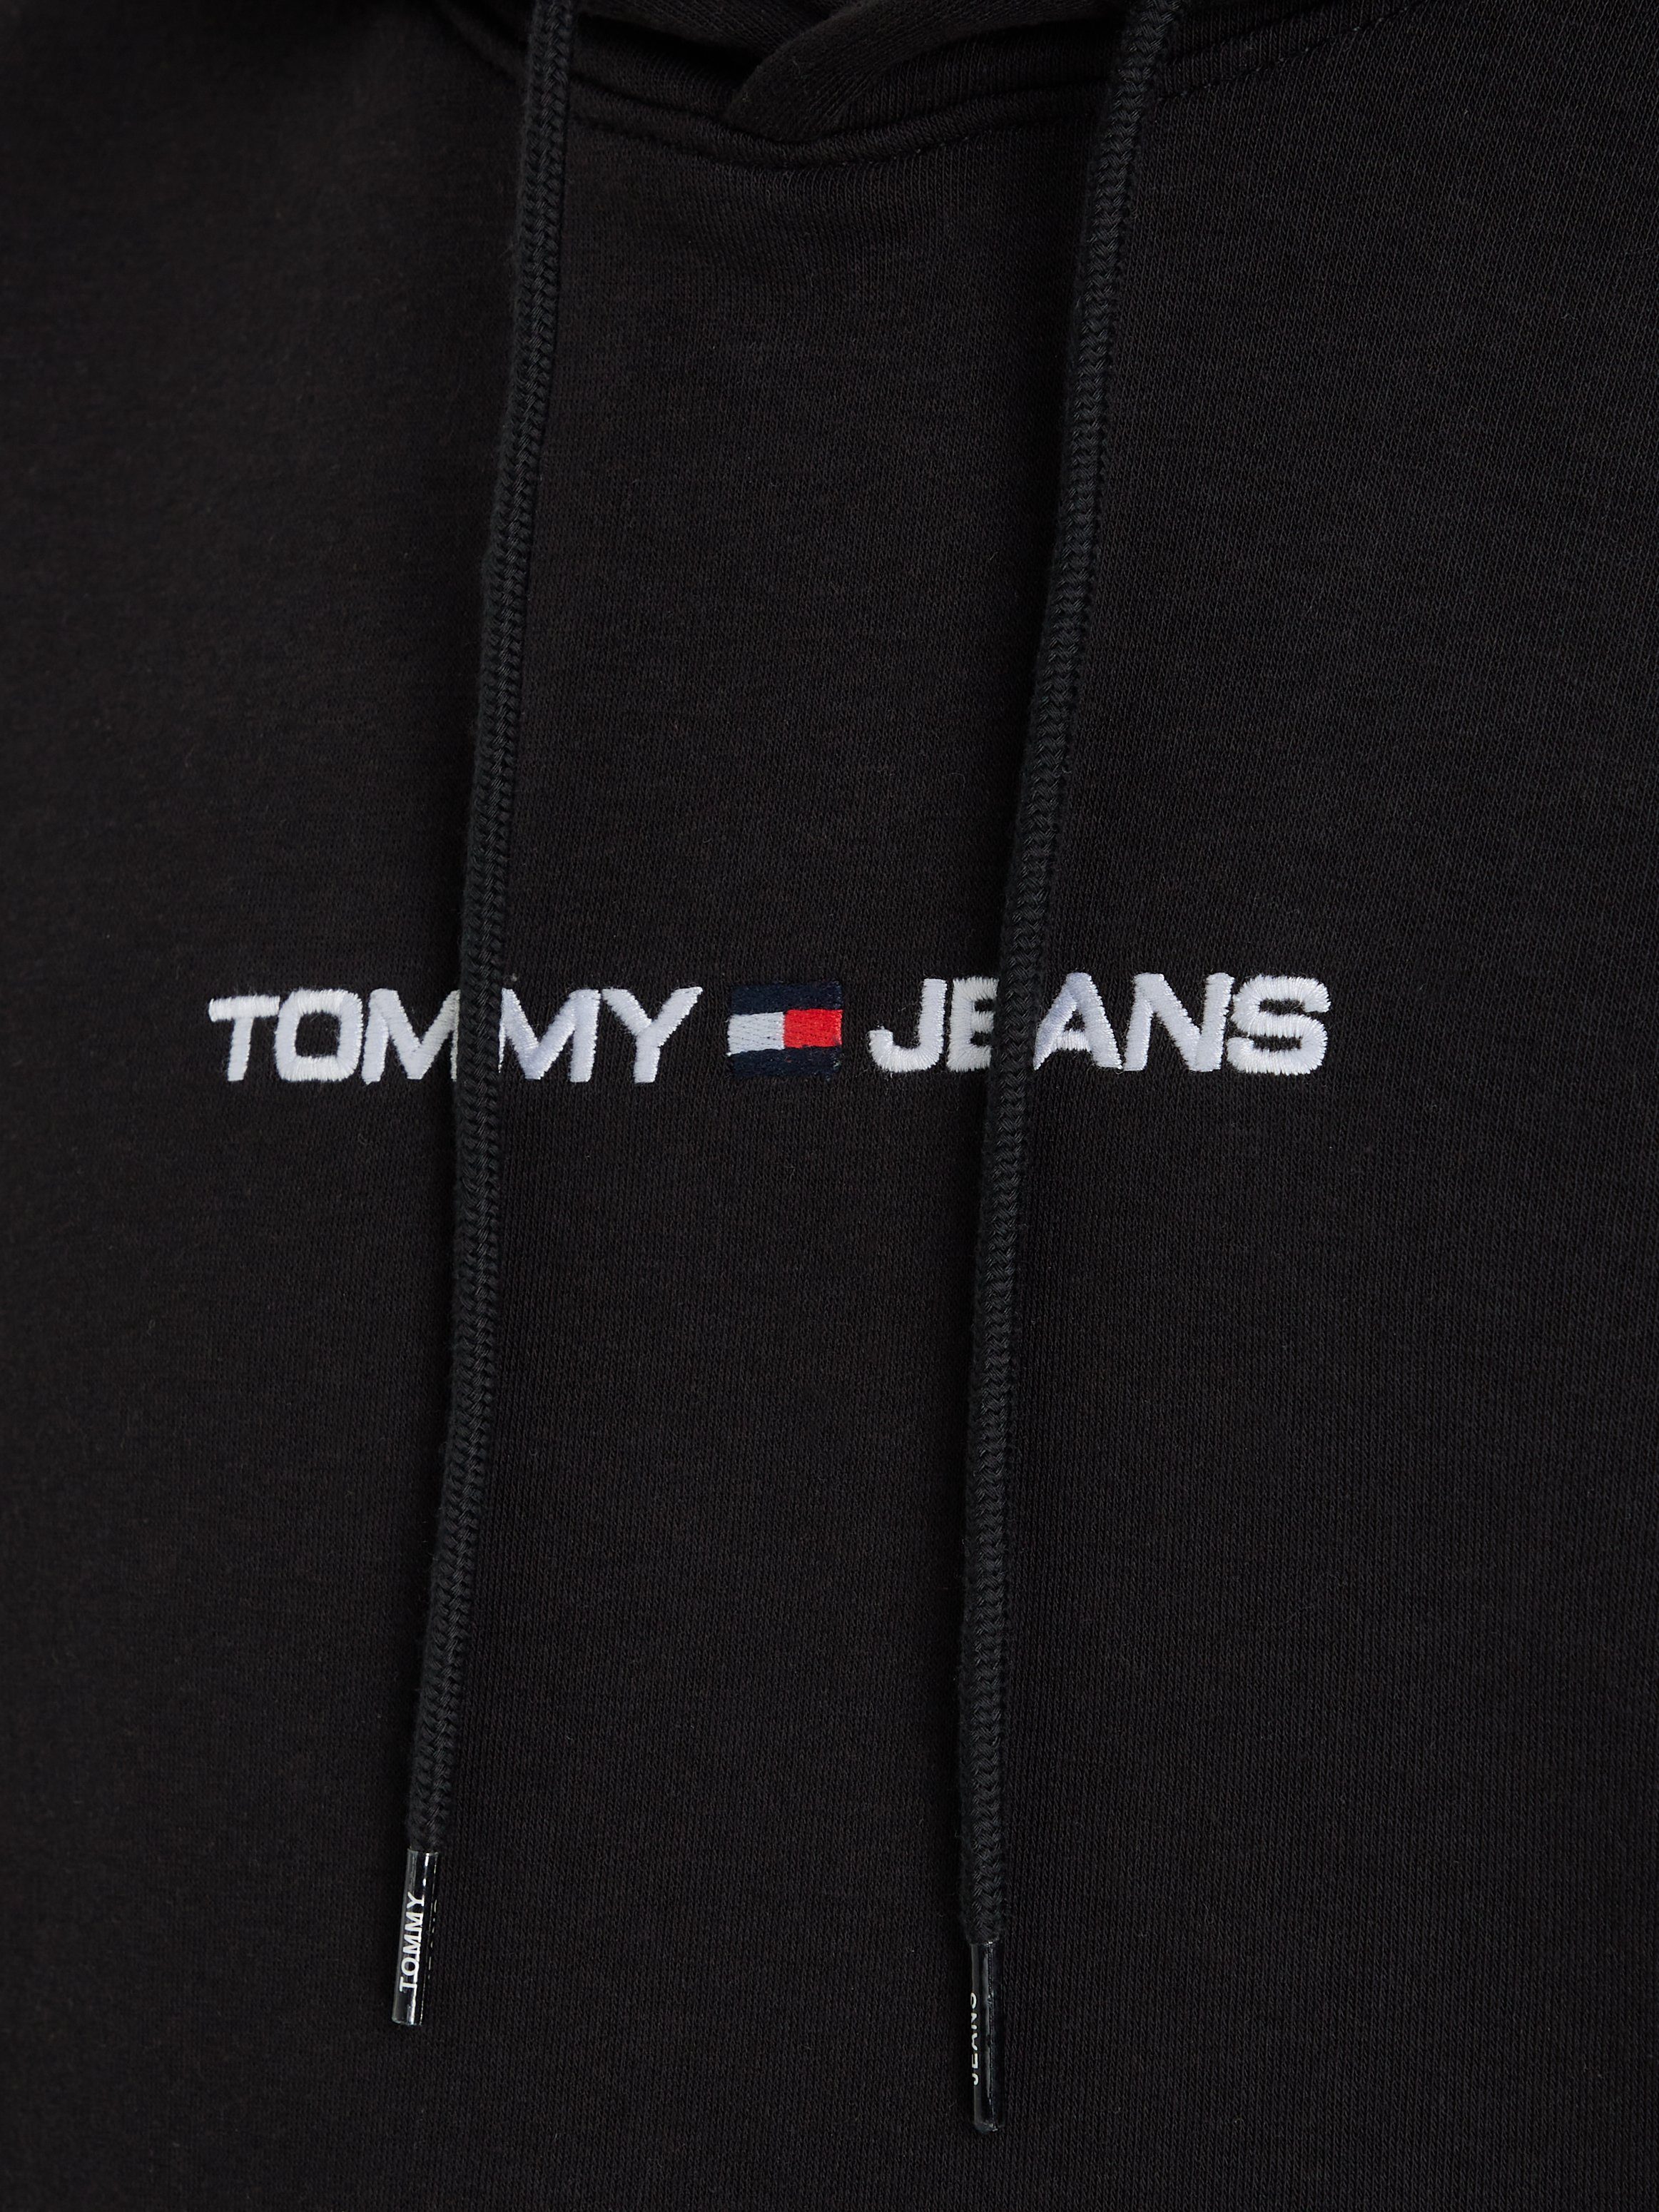 REG LINEAR Jeans Kapuzensweatshirt Tommy TJM HOODIE Black